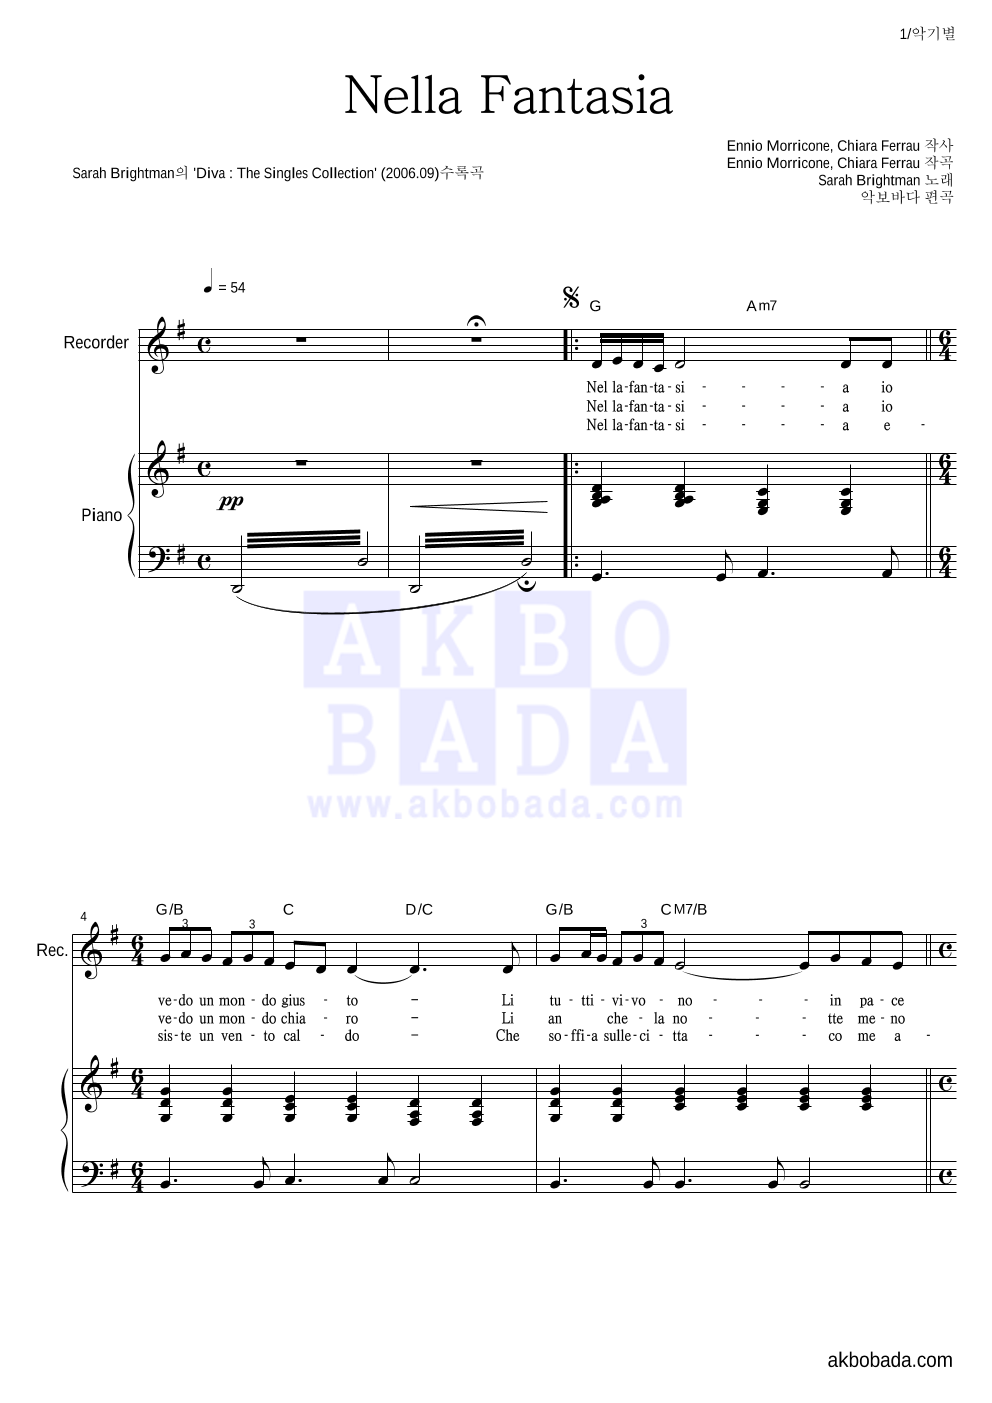 Sarah Brightman - Nella Fantasia 리코더&피아노 악보 